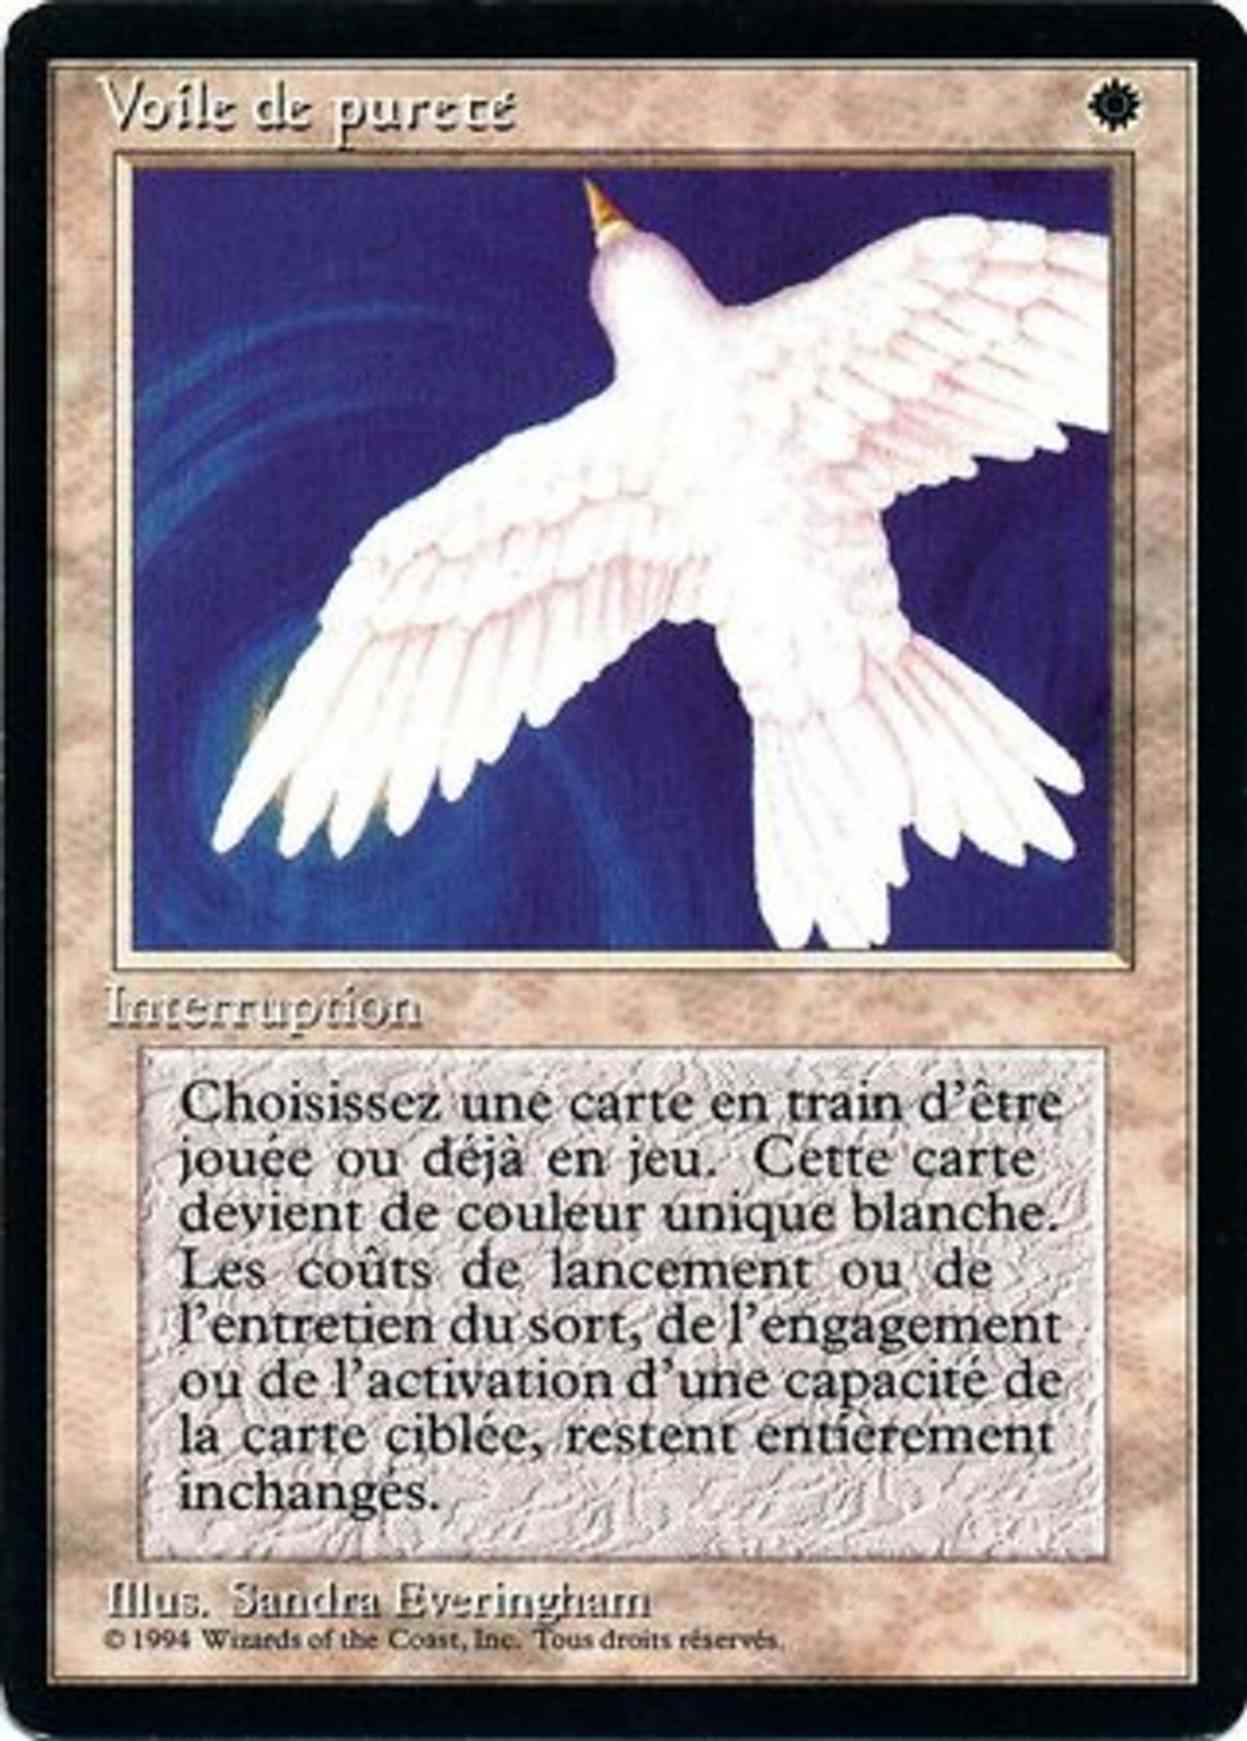 Purelace magic card front